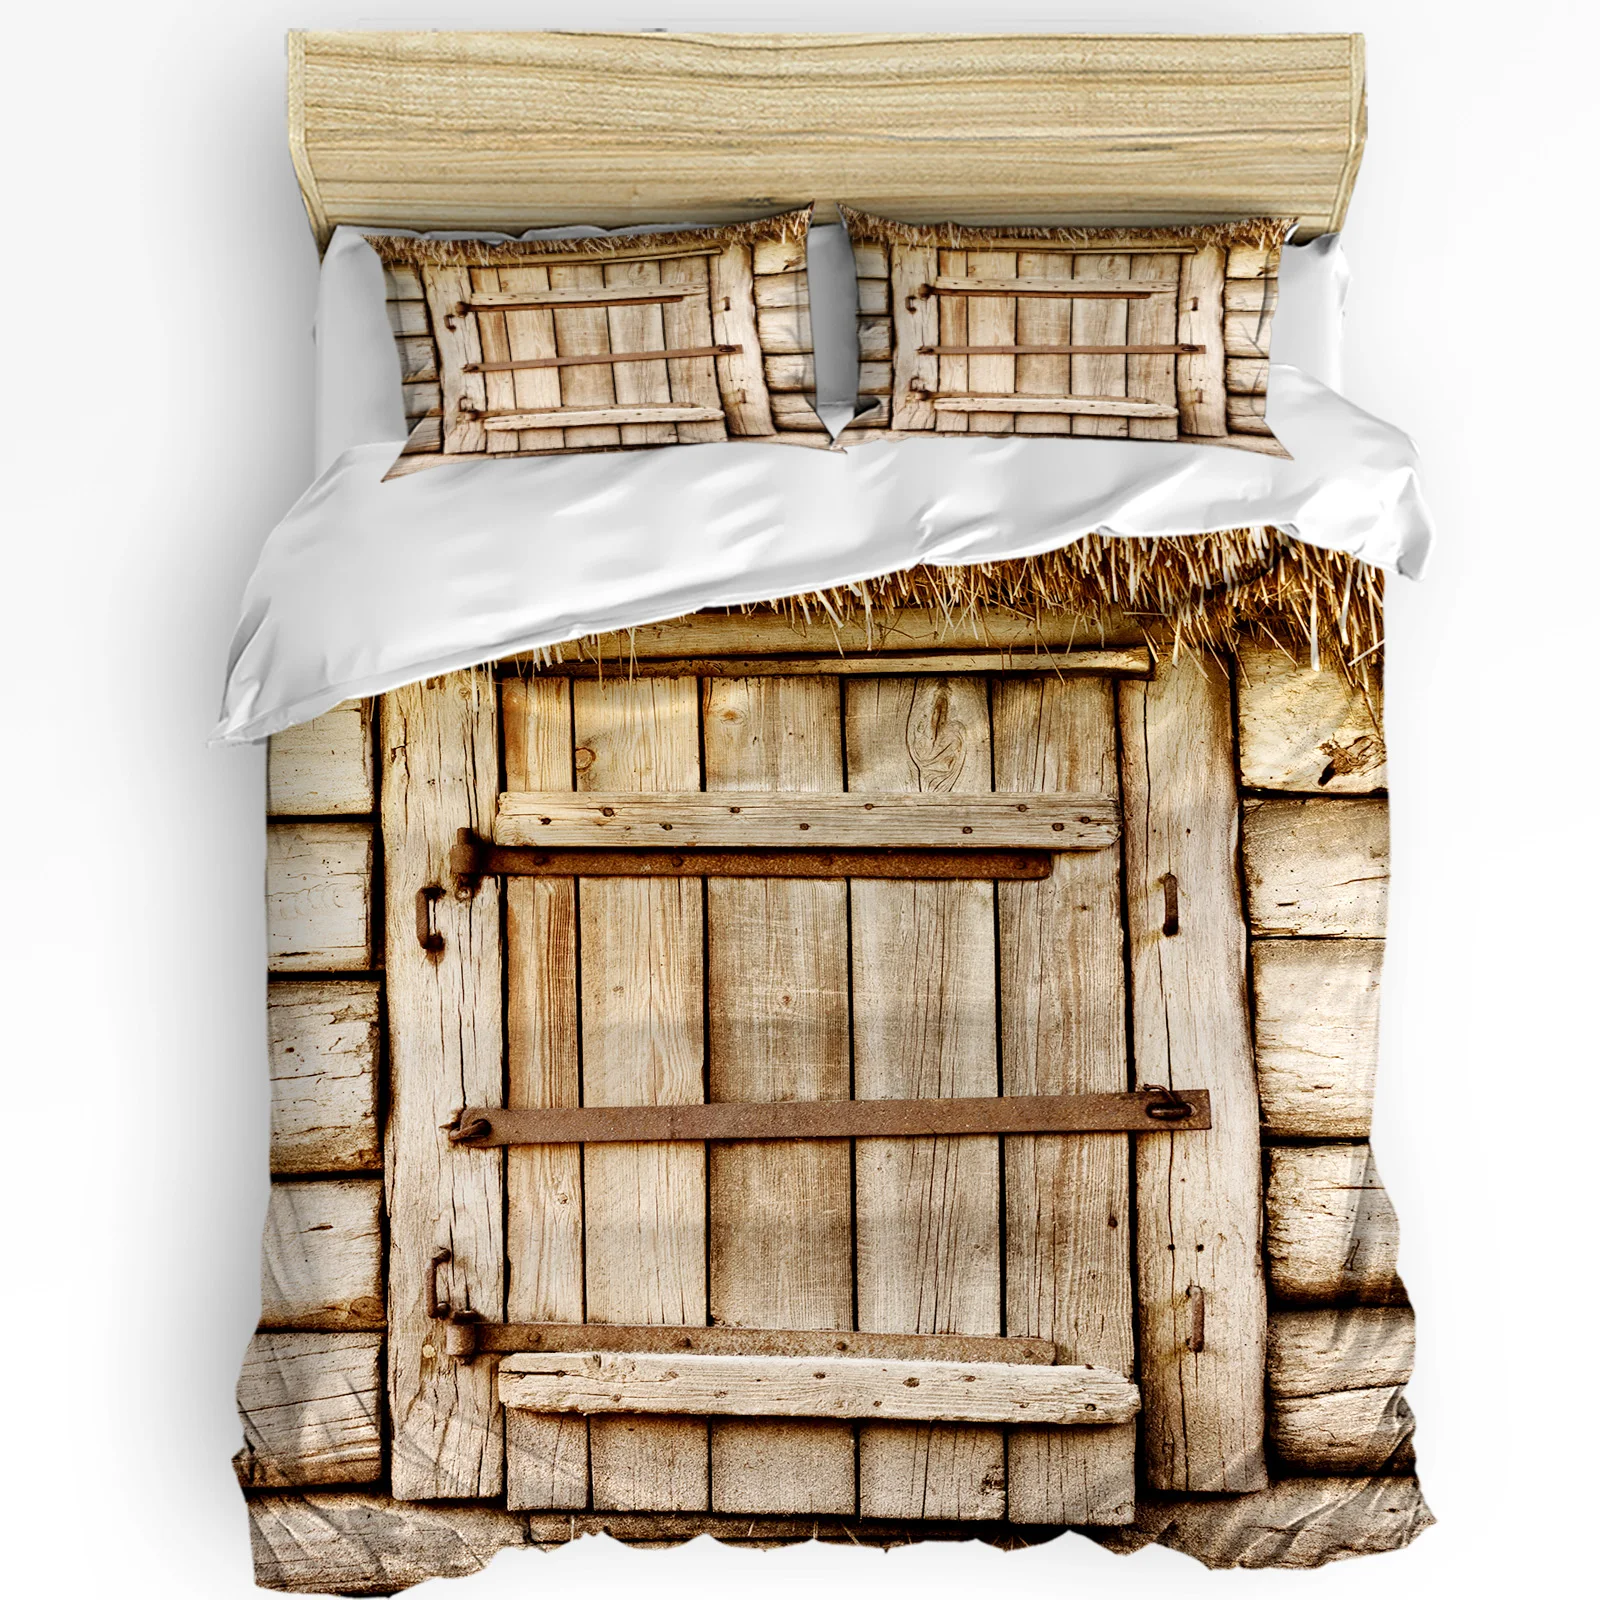 

3pcs Bedding Set Barn Wooden Door Straw Home Textile Duvet Cover Pillow Case Boy Kid Teen Girl Bedding Covers Set